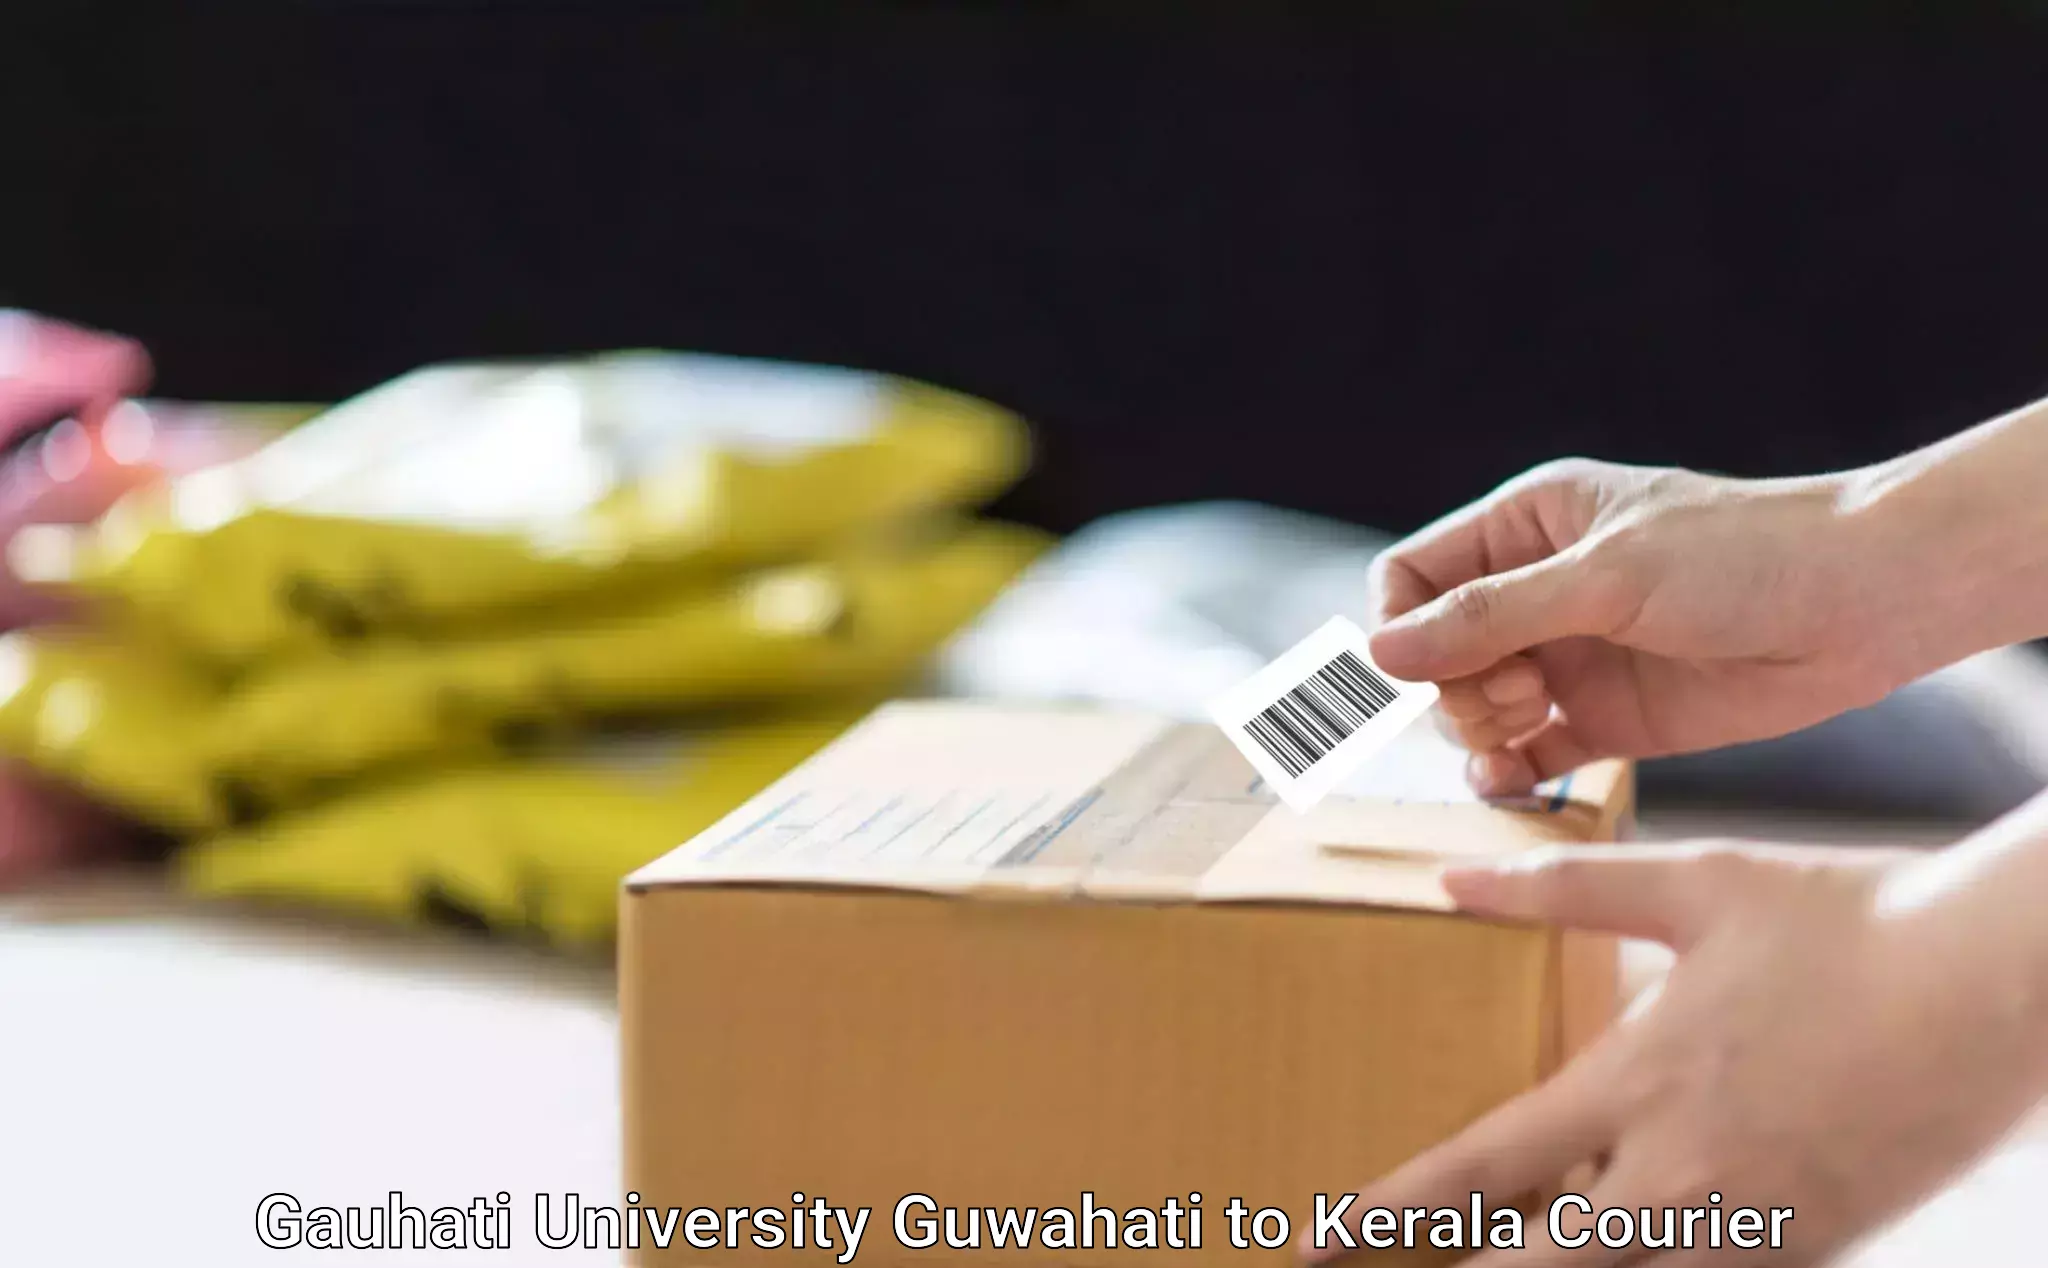 Enhanced tracking features in Gauhati University Guwahati to Kerala